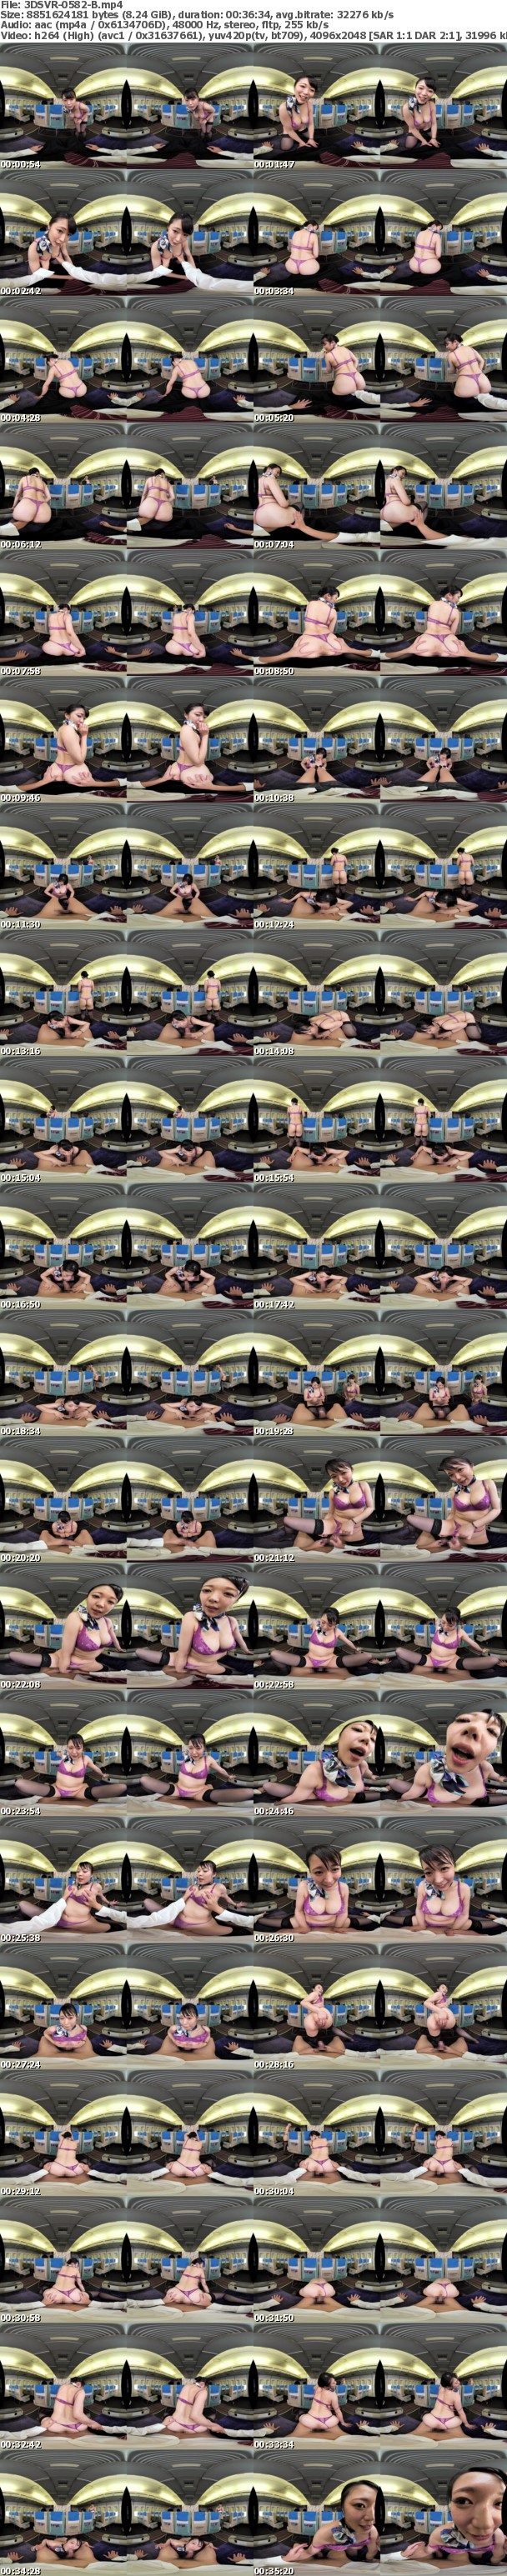 (VR) 3DSVR-0582 「制服・下着・全裸」でおもてなしまたがりオマ○コ航空VR 2